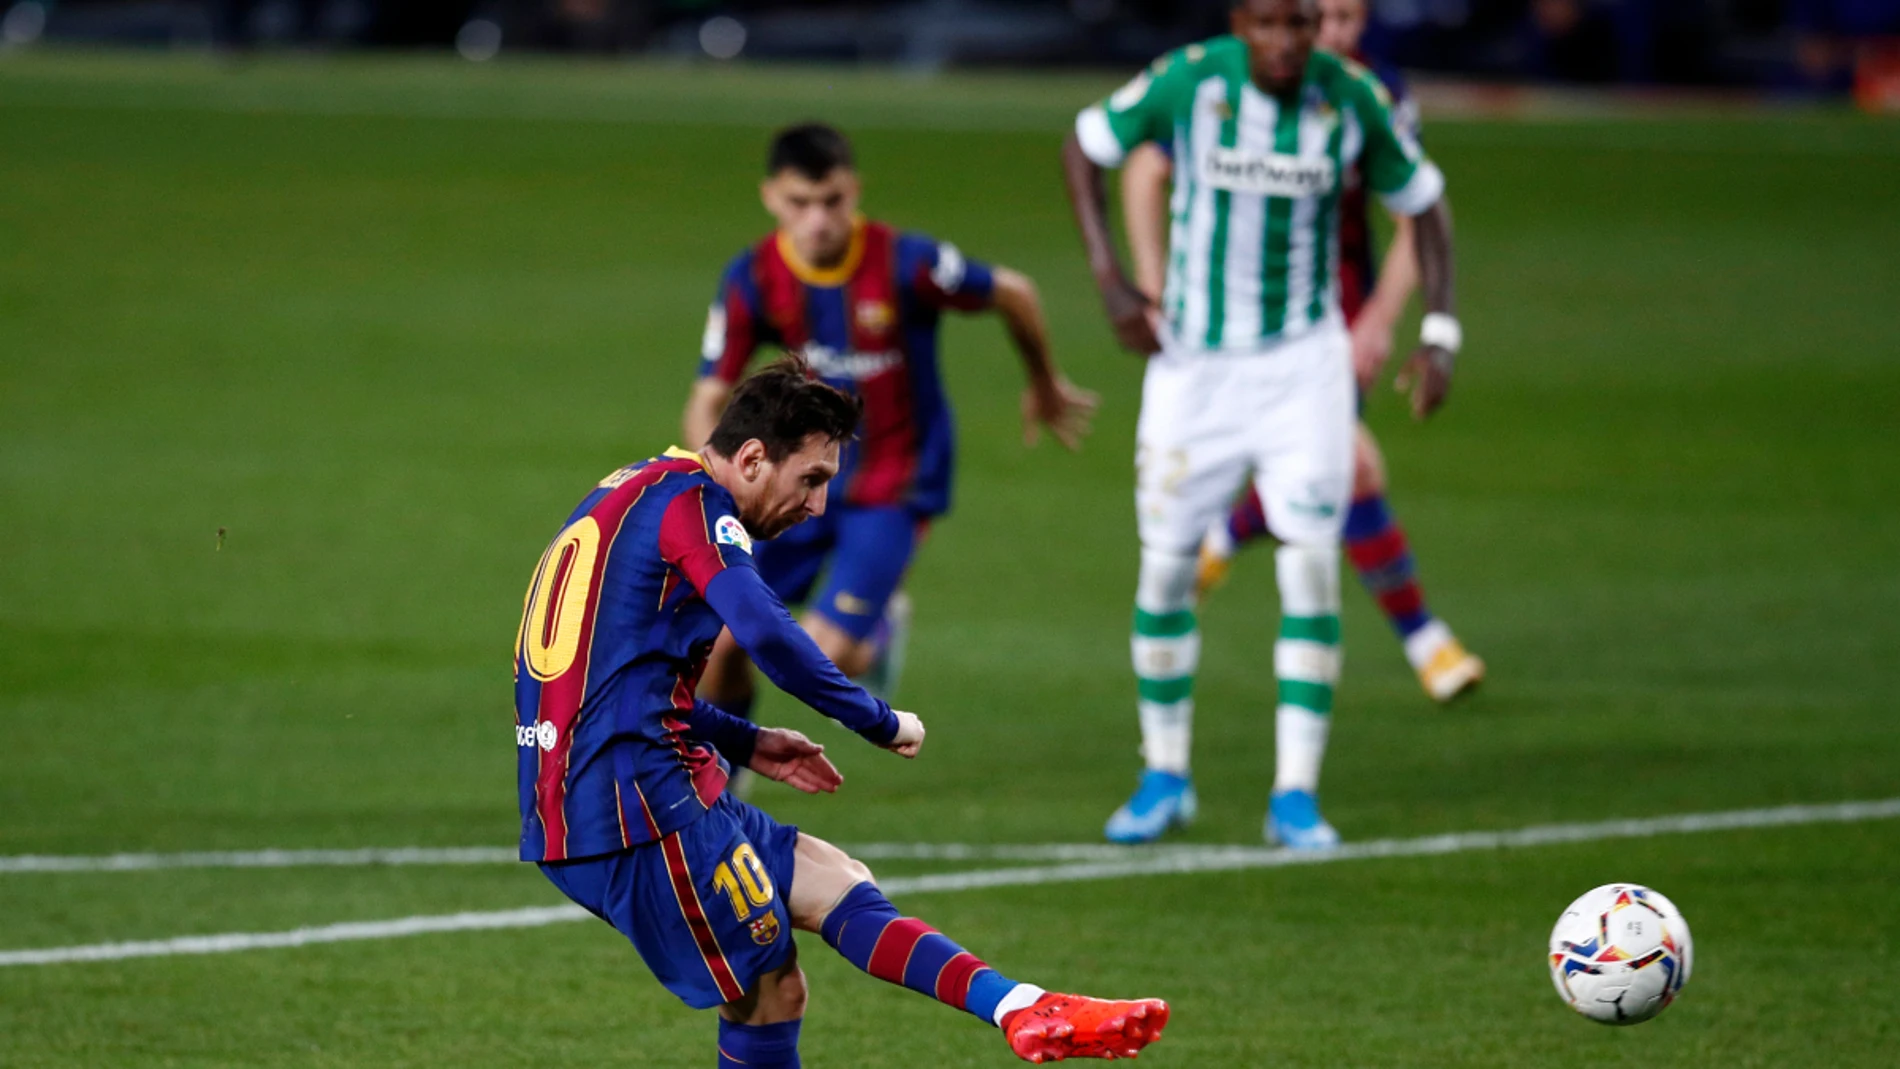 Messi lanza un penalti